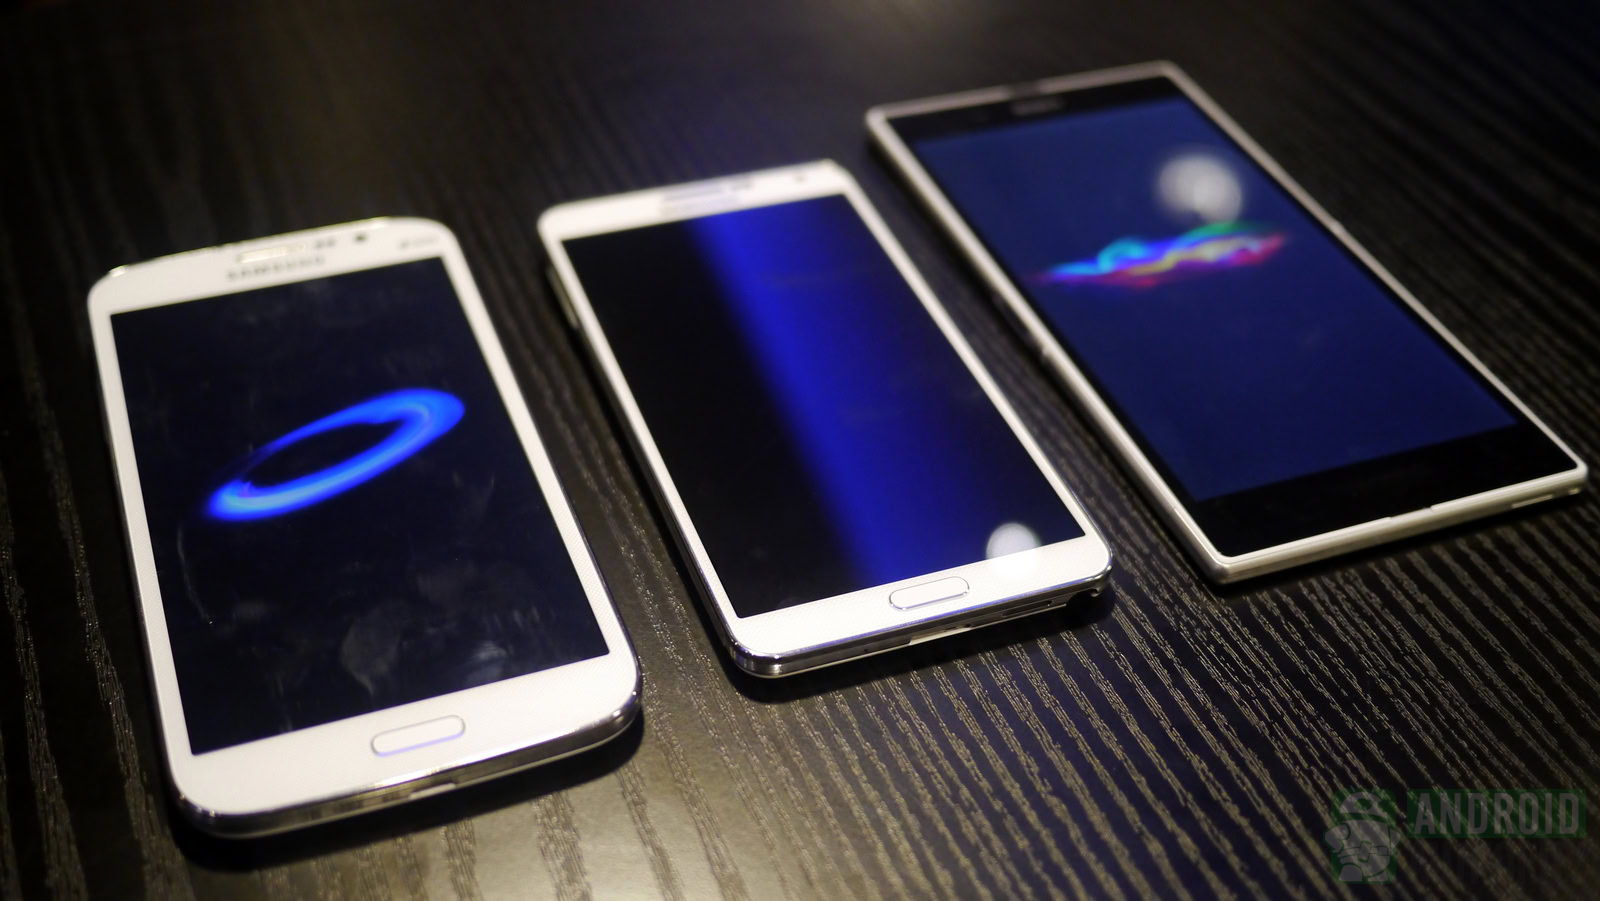 Samsung Galaxy Note 3 mega 5.8 xperia z ultra aa 1